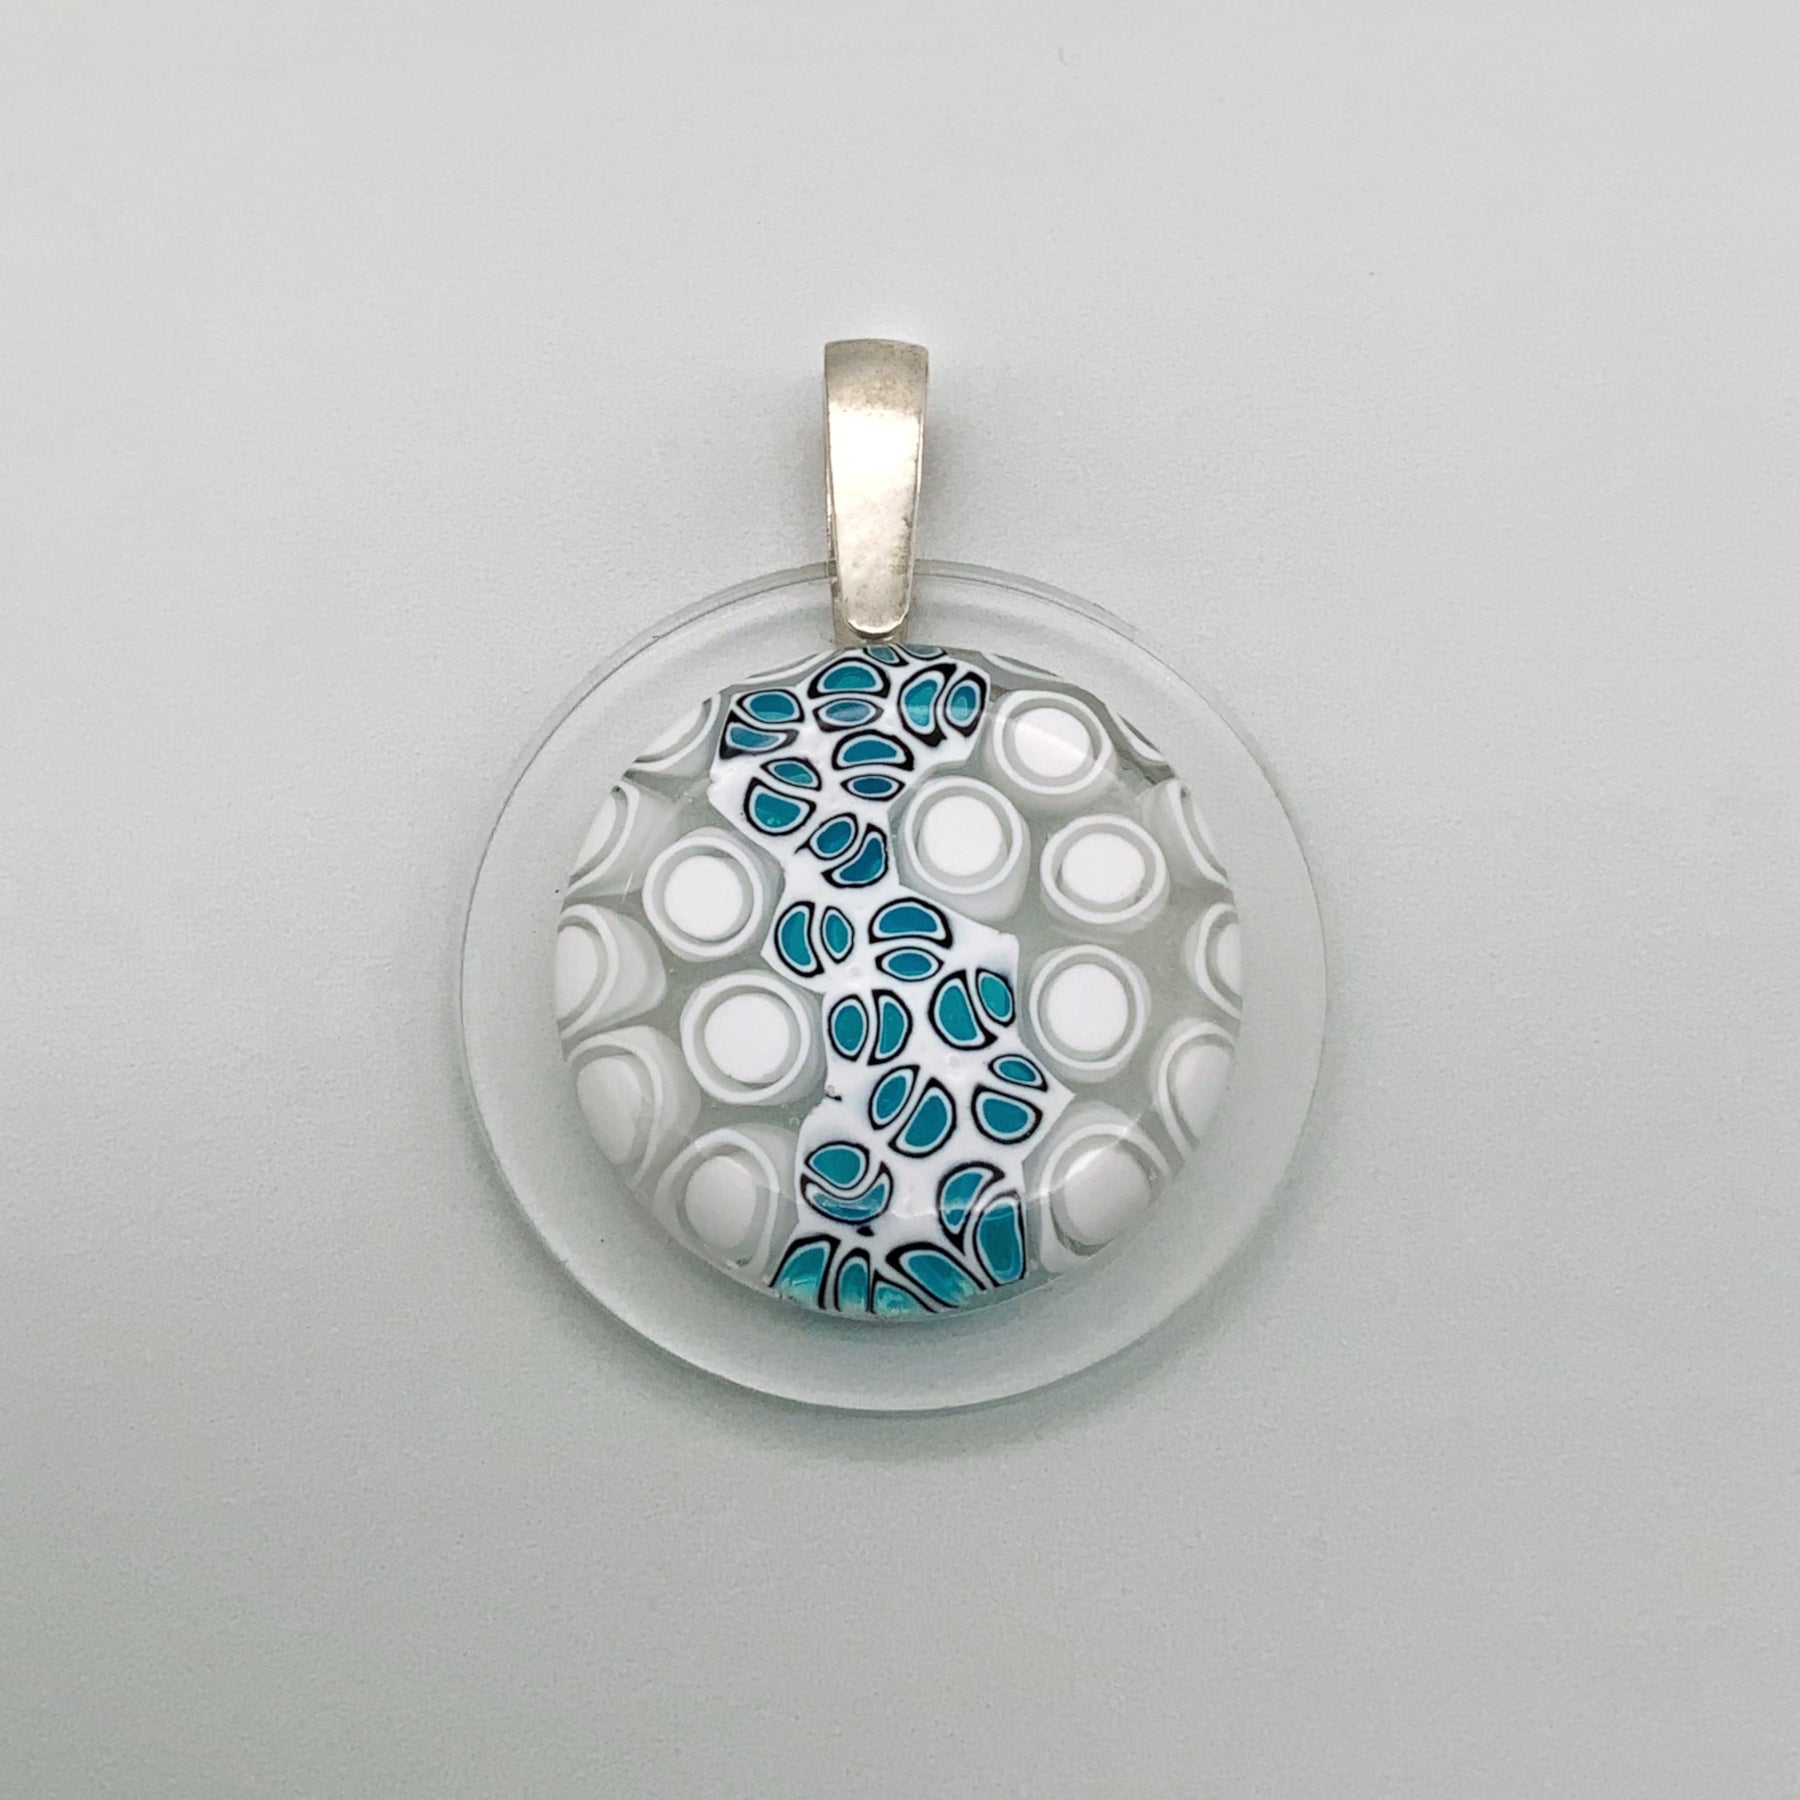 White and turquoise hiveline pendant